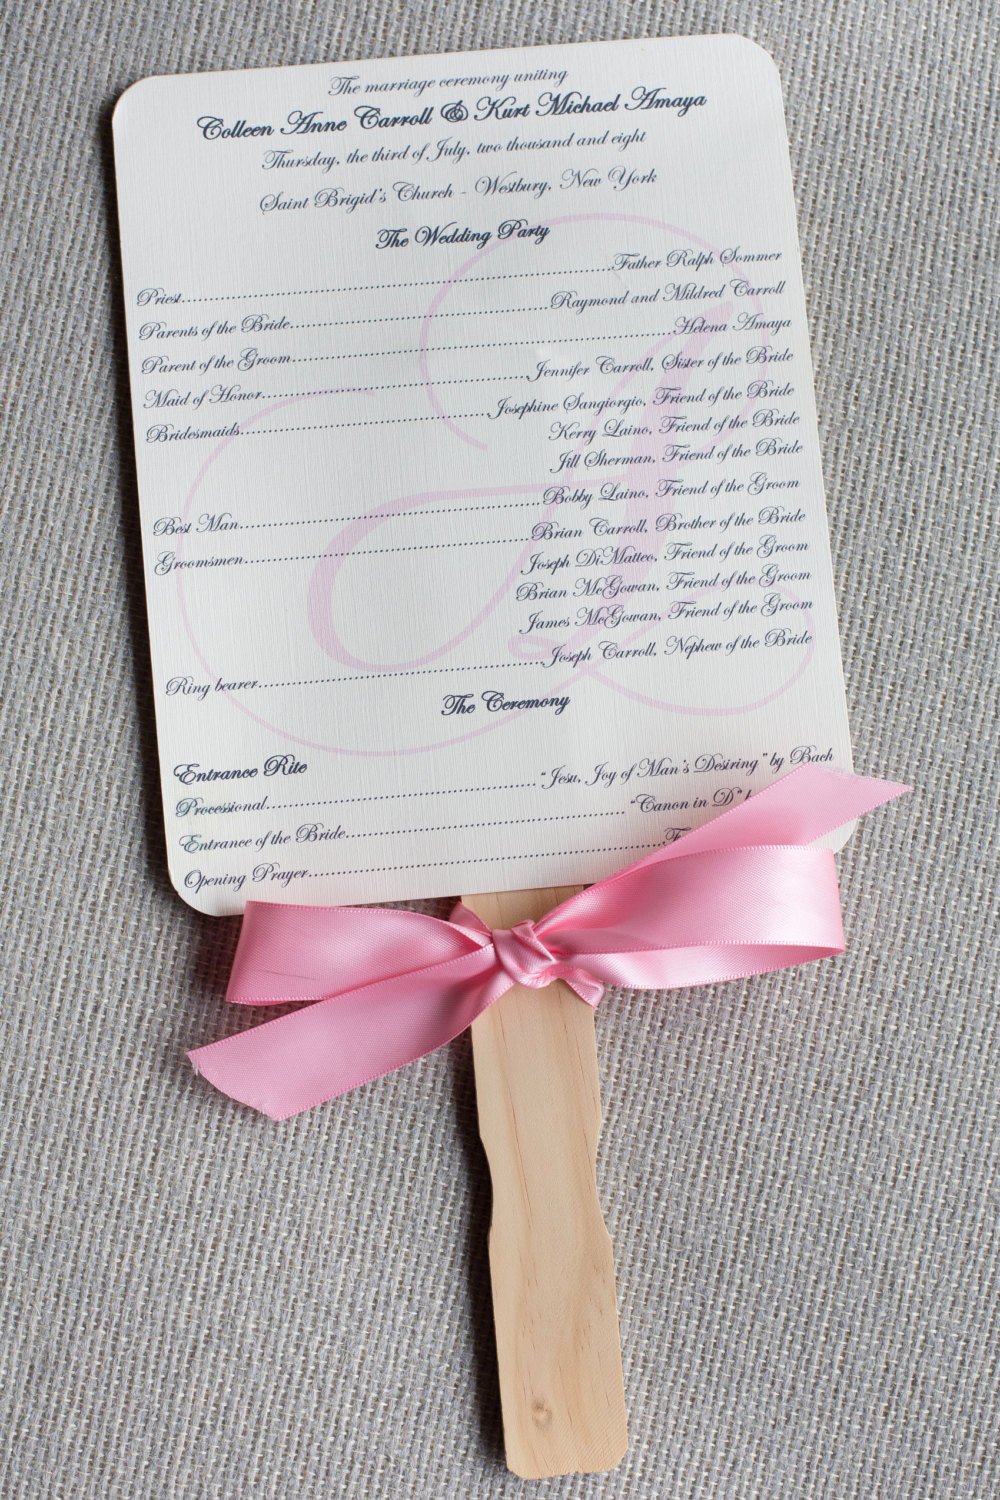 Sample Of Wedding Programme Elegant Wedding Ceremony Paddle Fans Ceremony by Eleven18designstudio